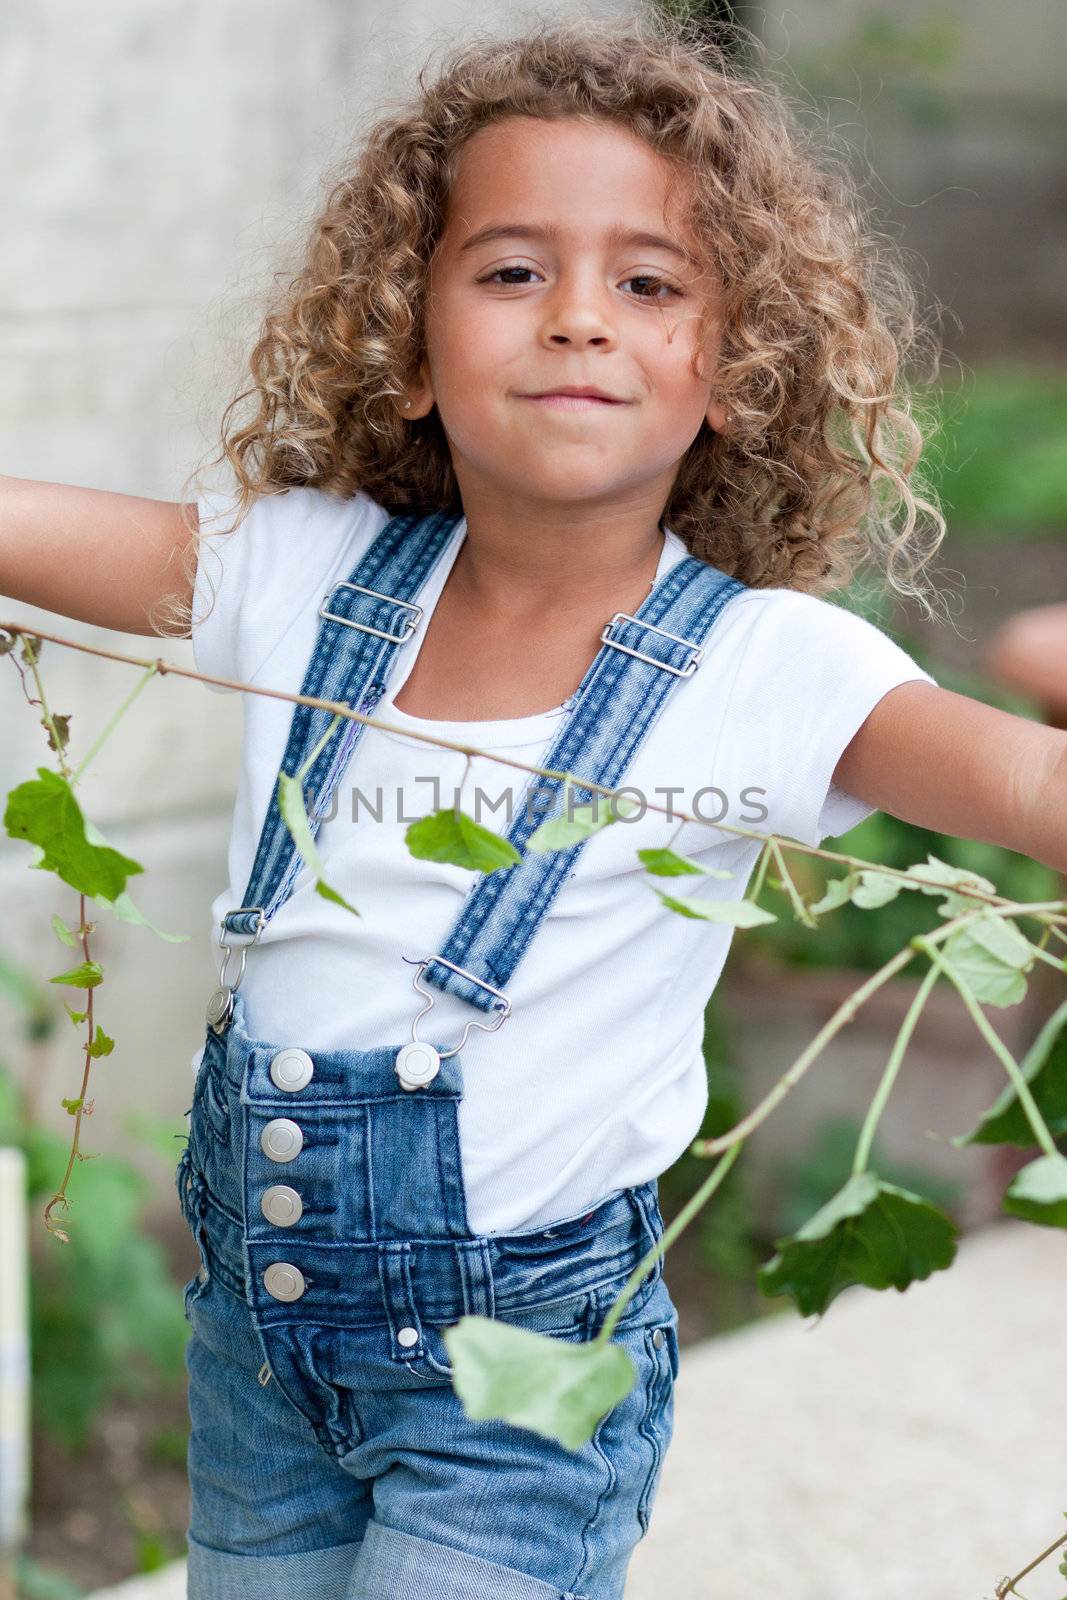 Cute little girl gardening by TristanBM